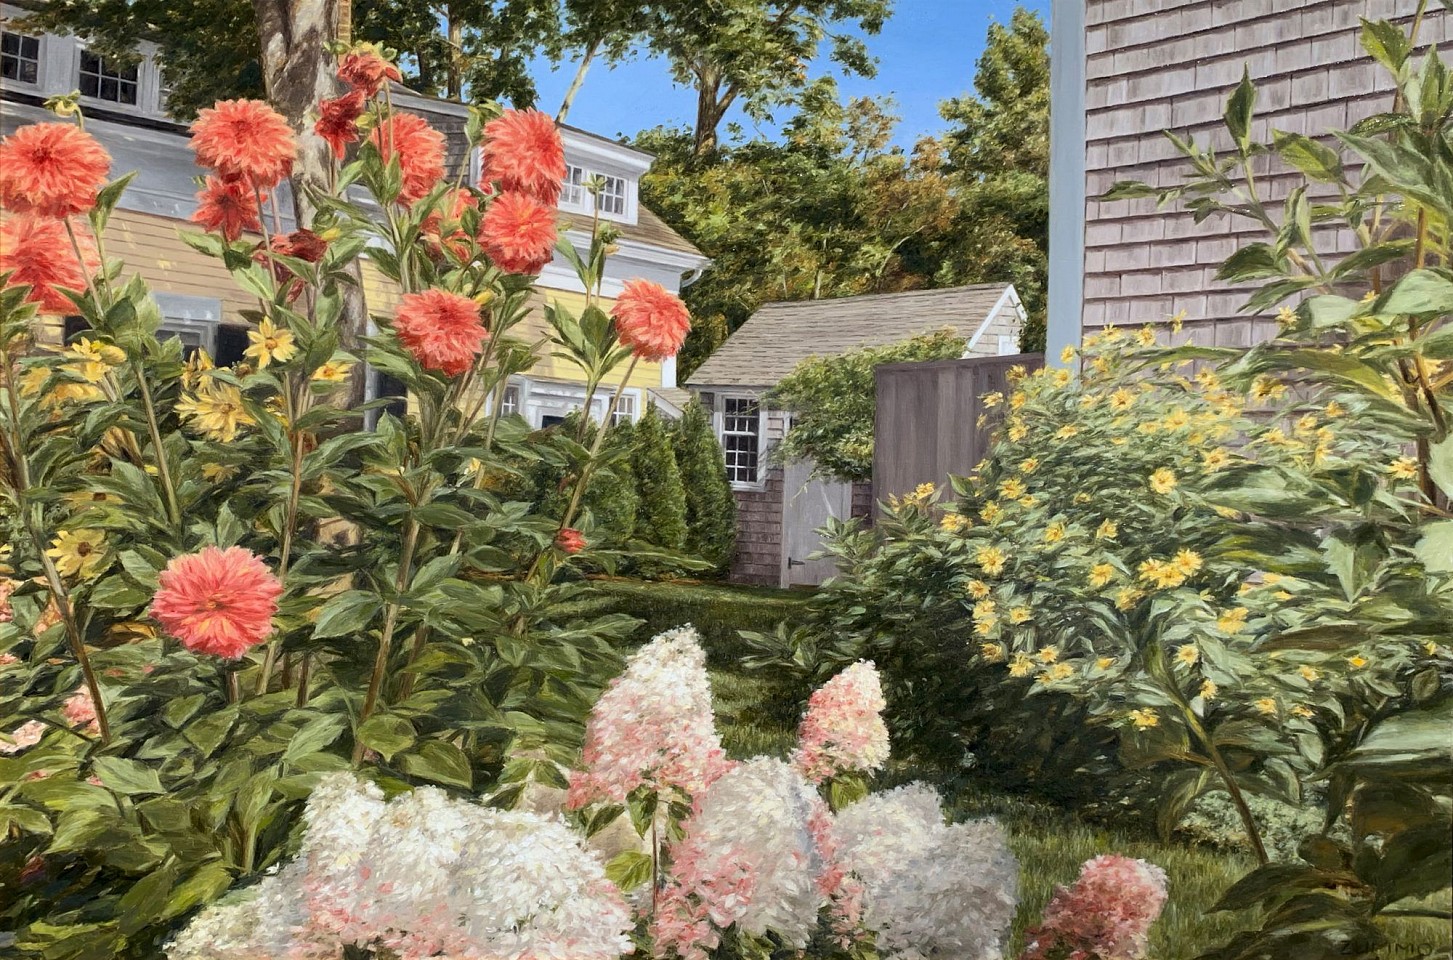 Lori Zummo, Nantucket Backyard Garden, 2023
oil on canvas, 24 x 36 in. (61 x 91.4 cm)
LZ230502